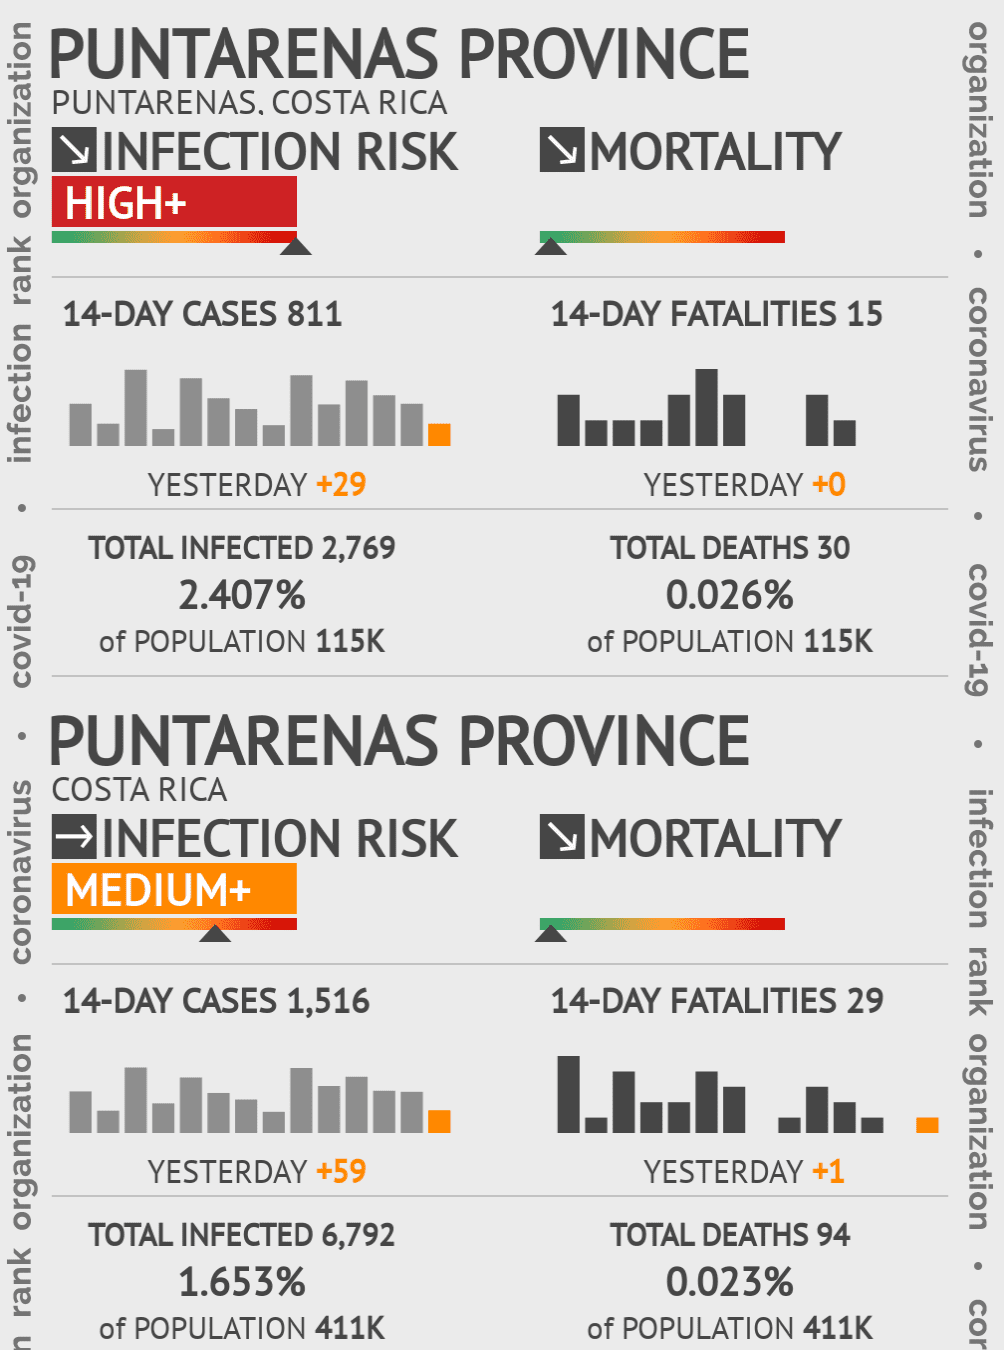 Puntarenas Coronavirus Covid-19 Risk of Infection on October 20, 2021